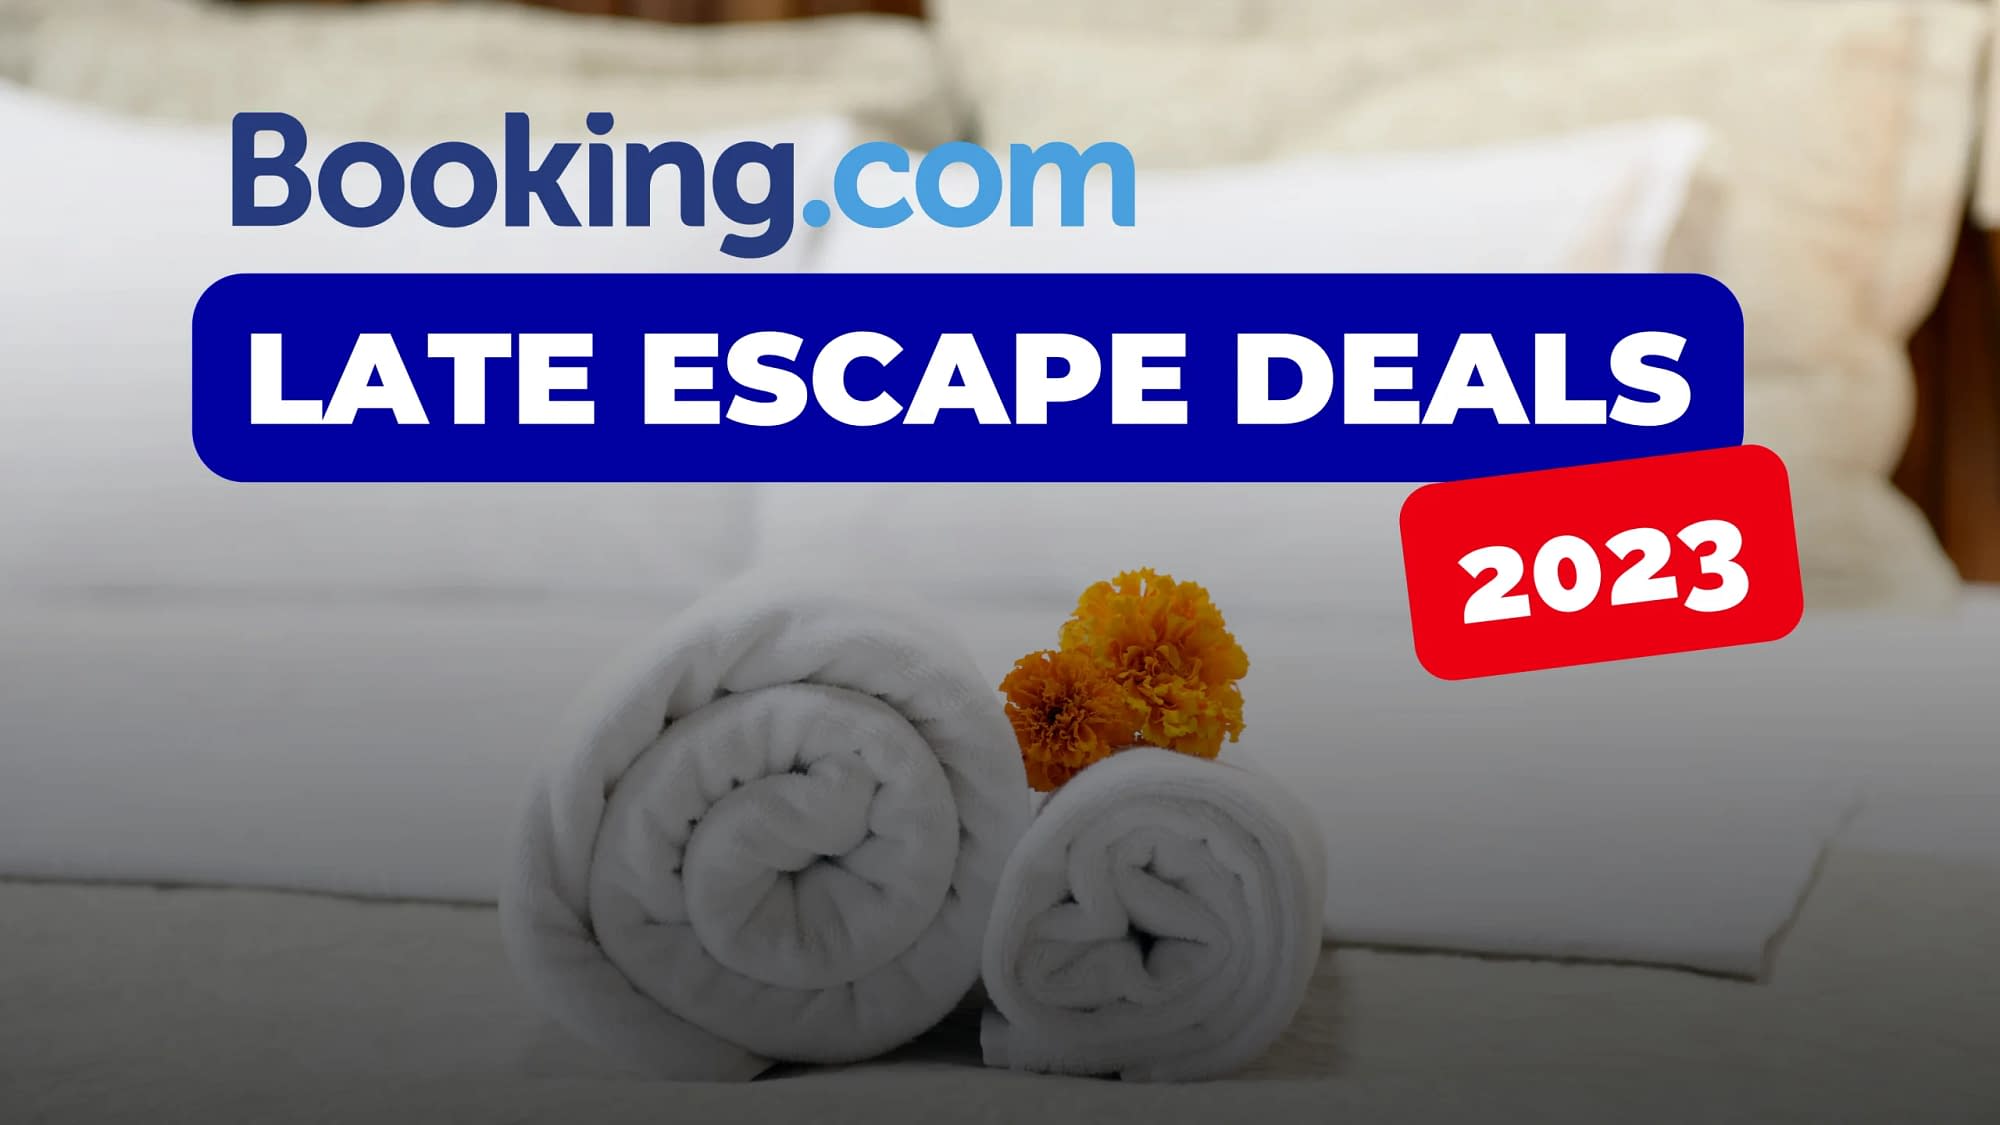 Booking.com Late Escape Deals (2023)